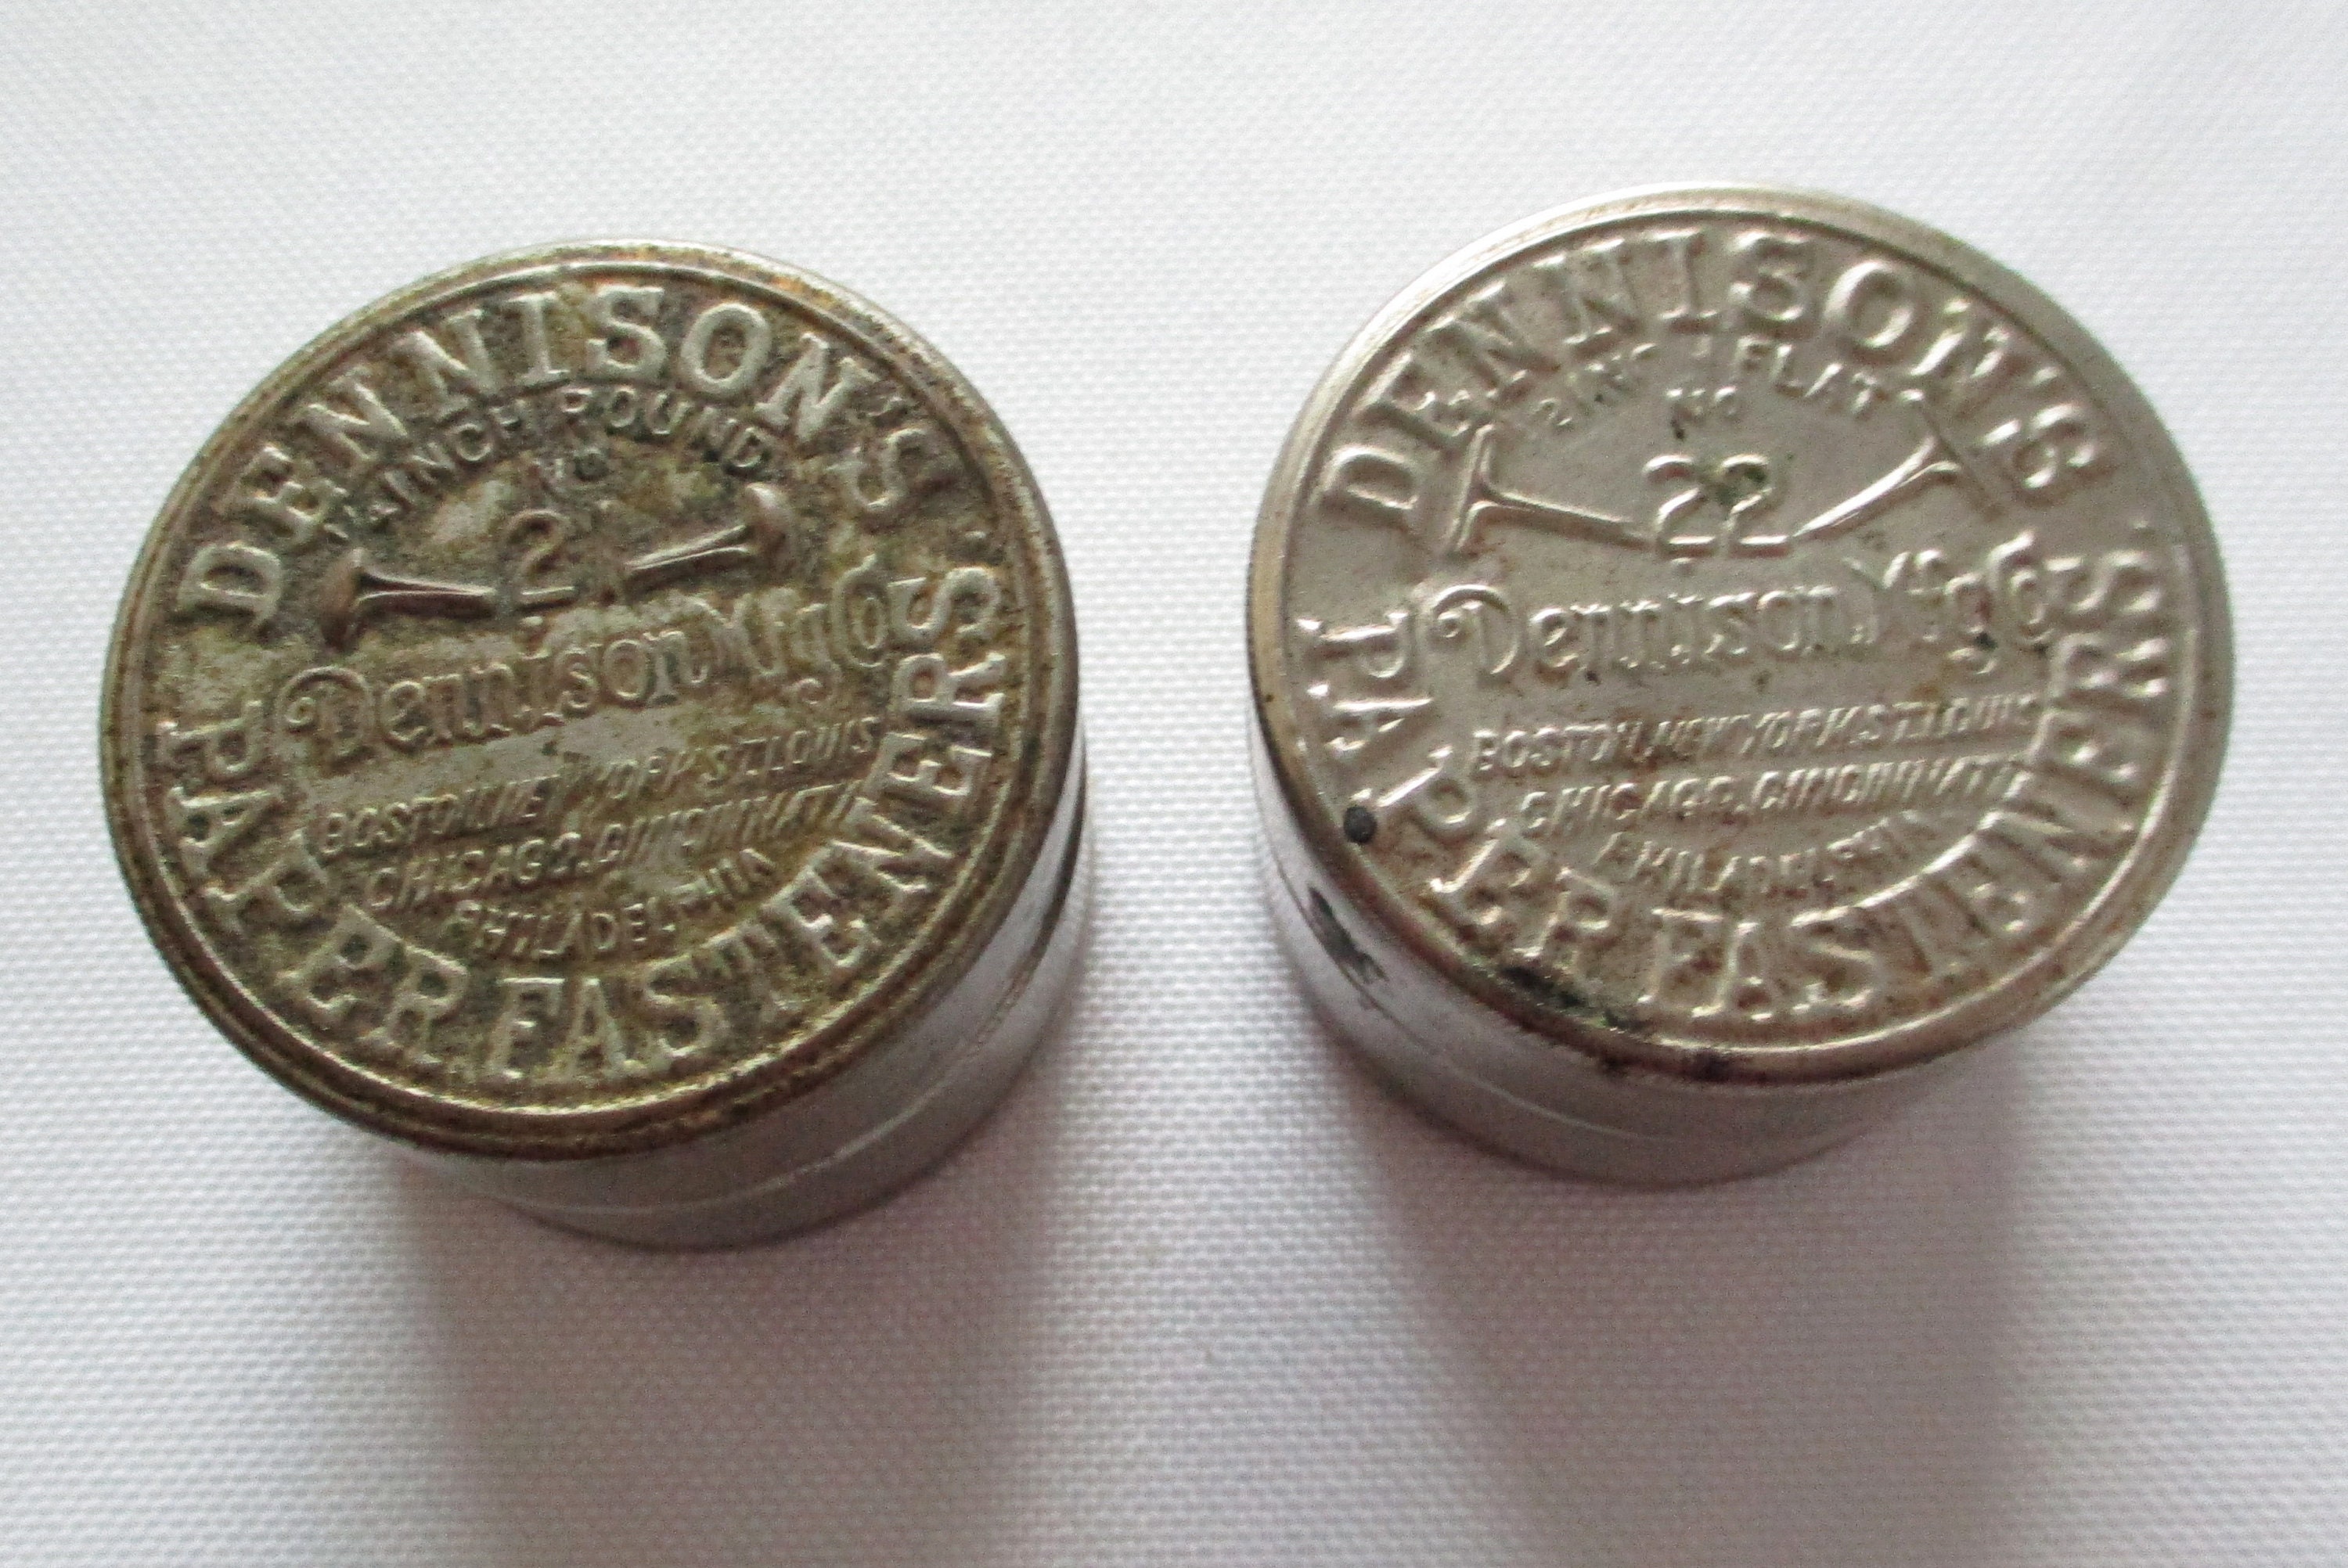 Vintage Dennison Buttoneer 5 Second Button Attacher Kit Stock No. 06001 